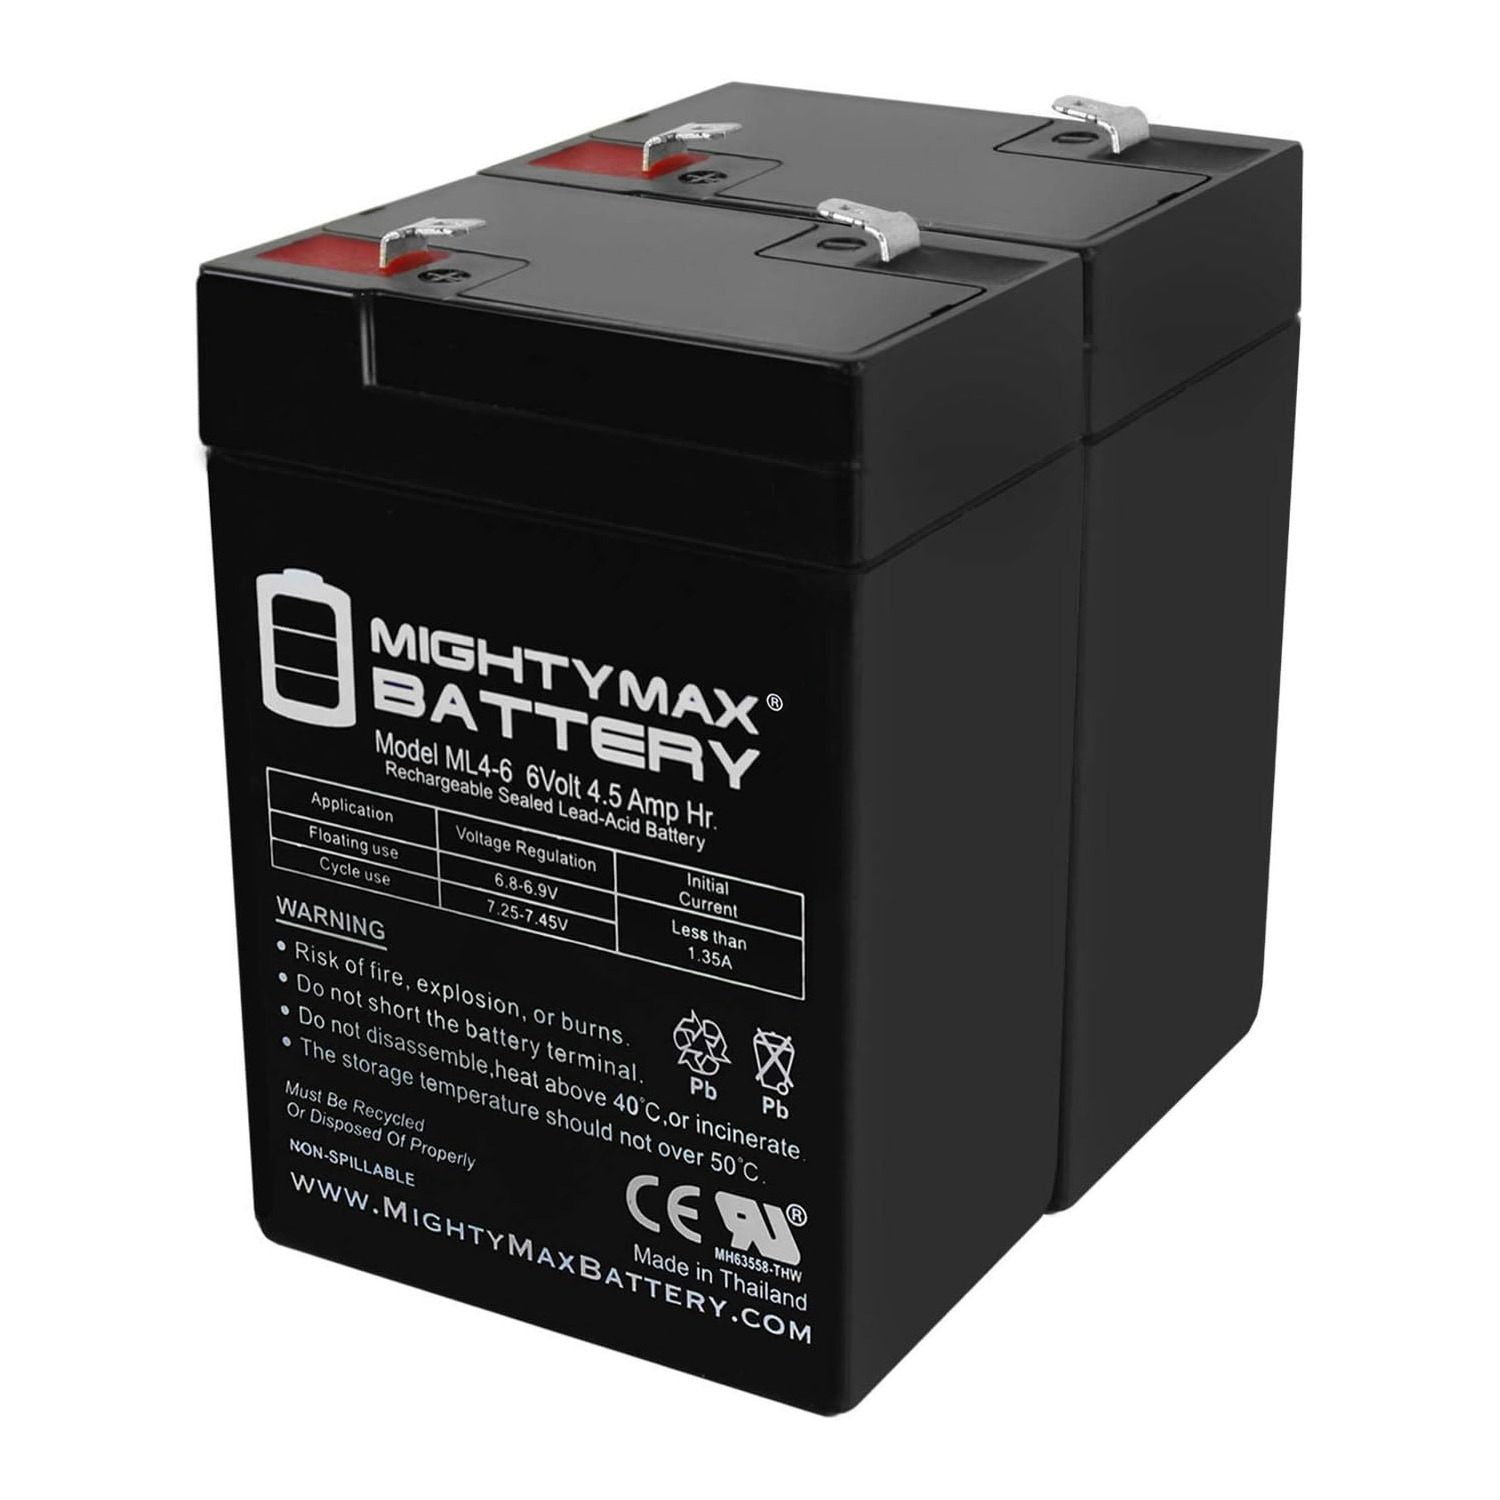 6V 4.5AH SLA Replacement Battery for Emergi-Lite CSM9 - 2 Pack